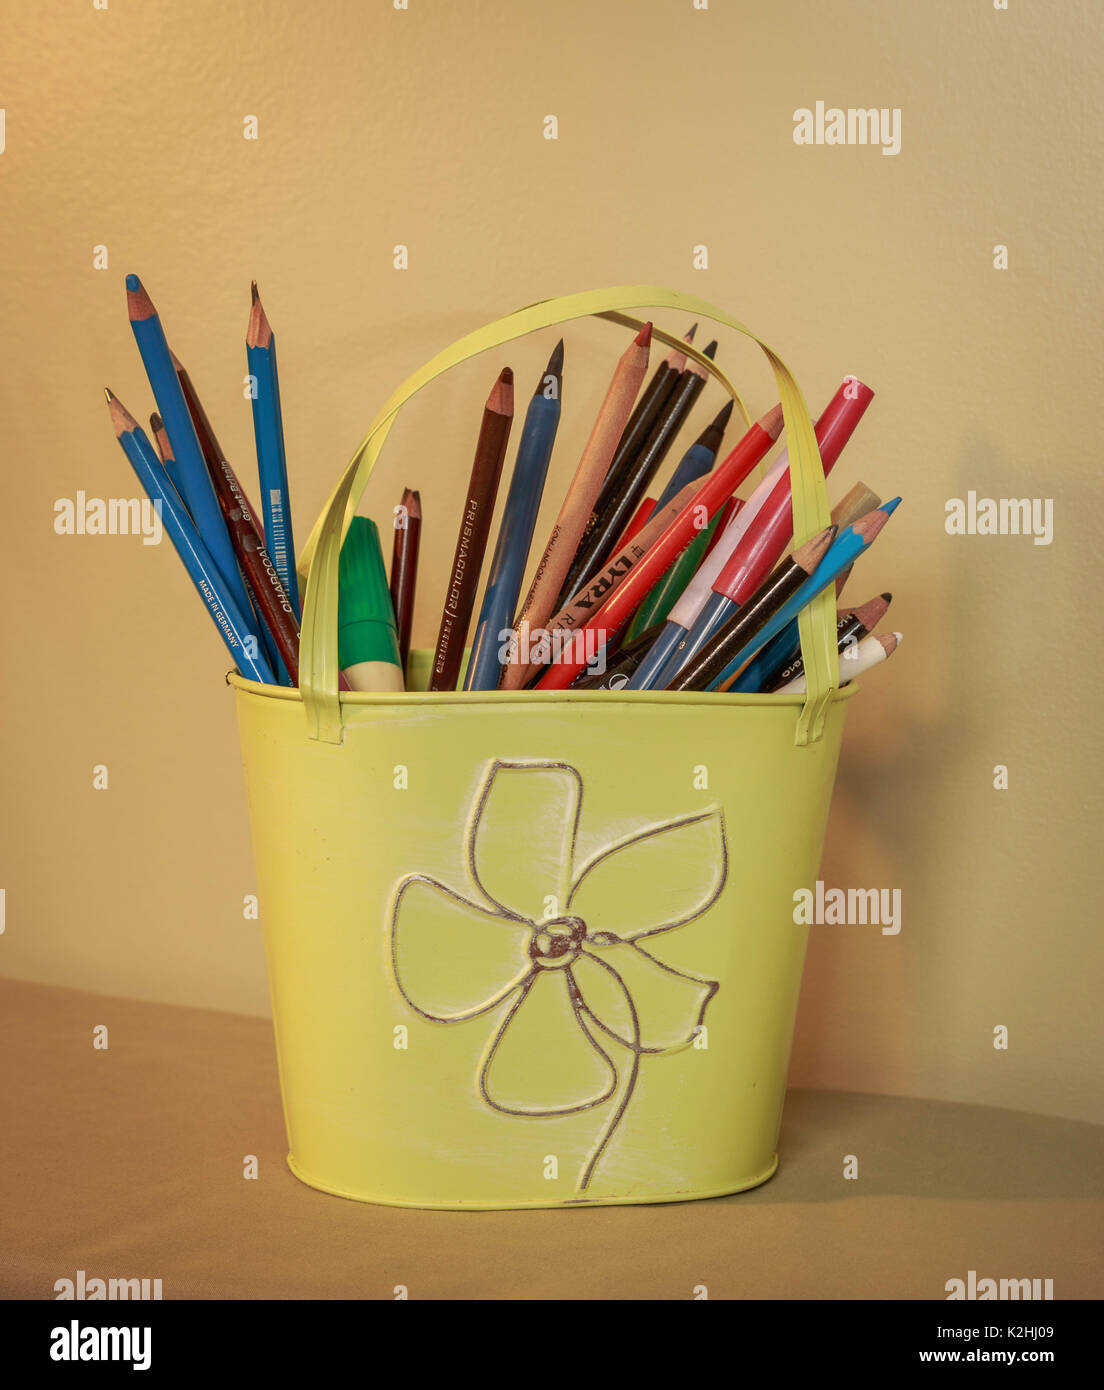 Six colourful glitter pens Stock Photo - Alamy